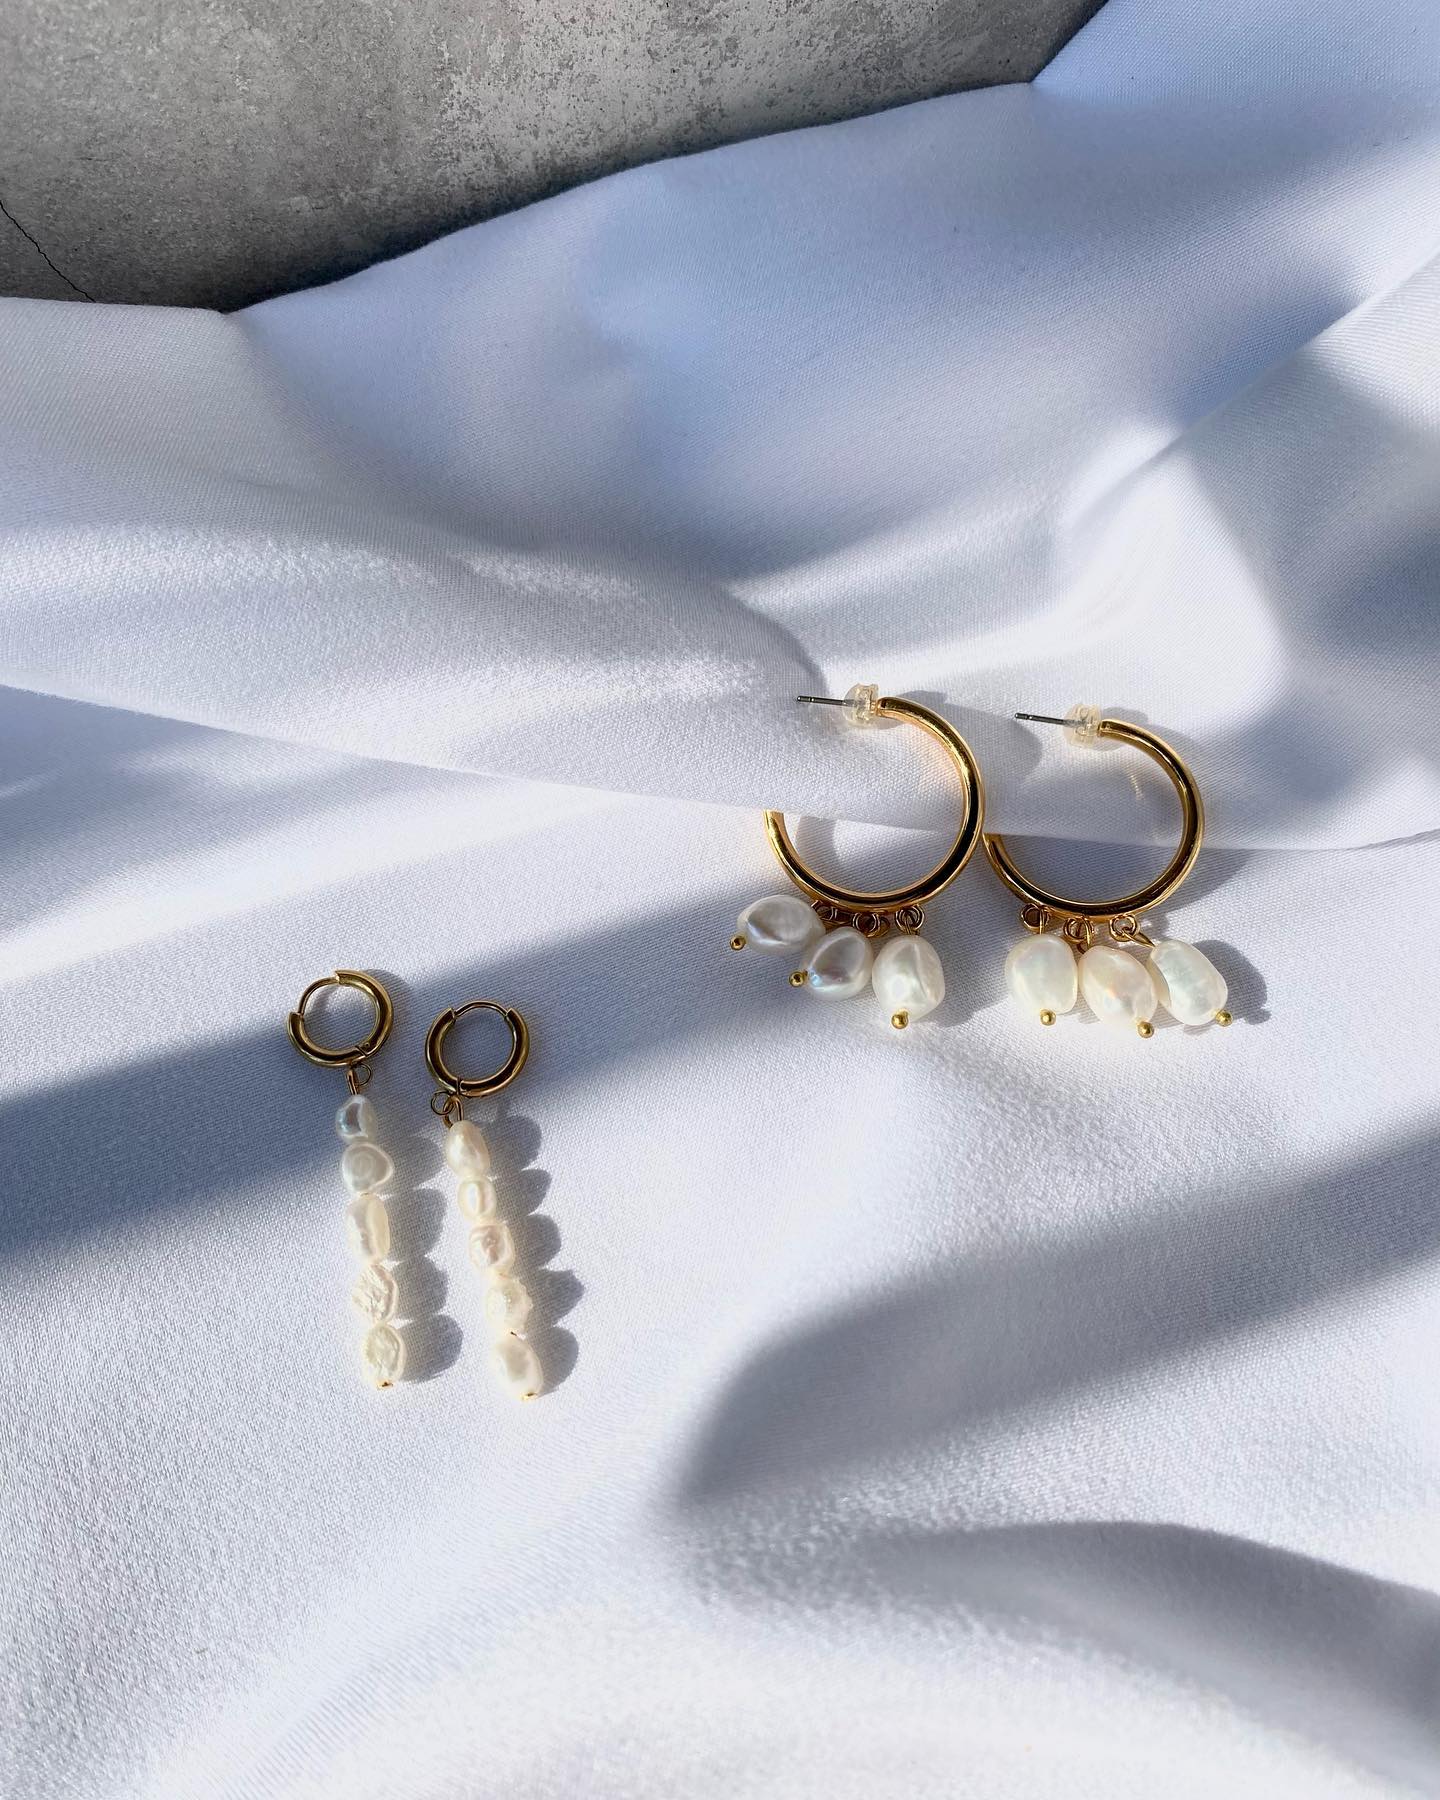 Pearls ✨🤍 
Shop Online 
➡️ https://funkyjewel.gr/el/ 
.
#newcollection #earringsaddict #earring #gold #pearls #midihoops #hoopearrings #jewellery #jewels #jewelryaddict #jewelrydesigner #handmadejewelry #funkyjewel #funkyjewel_tinos #funkyjewel_fj #shoponline #shopsmall